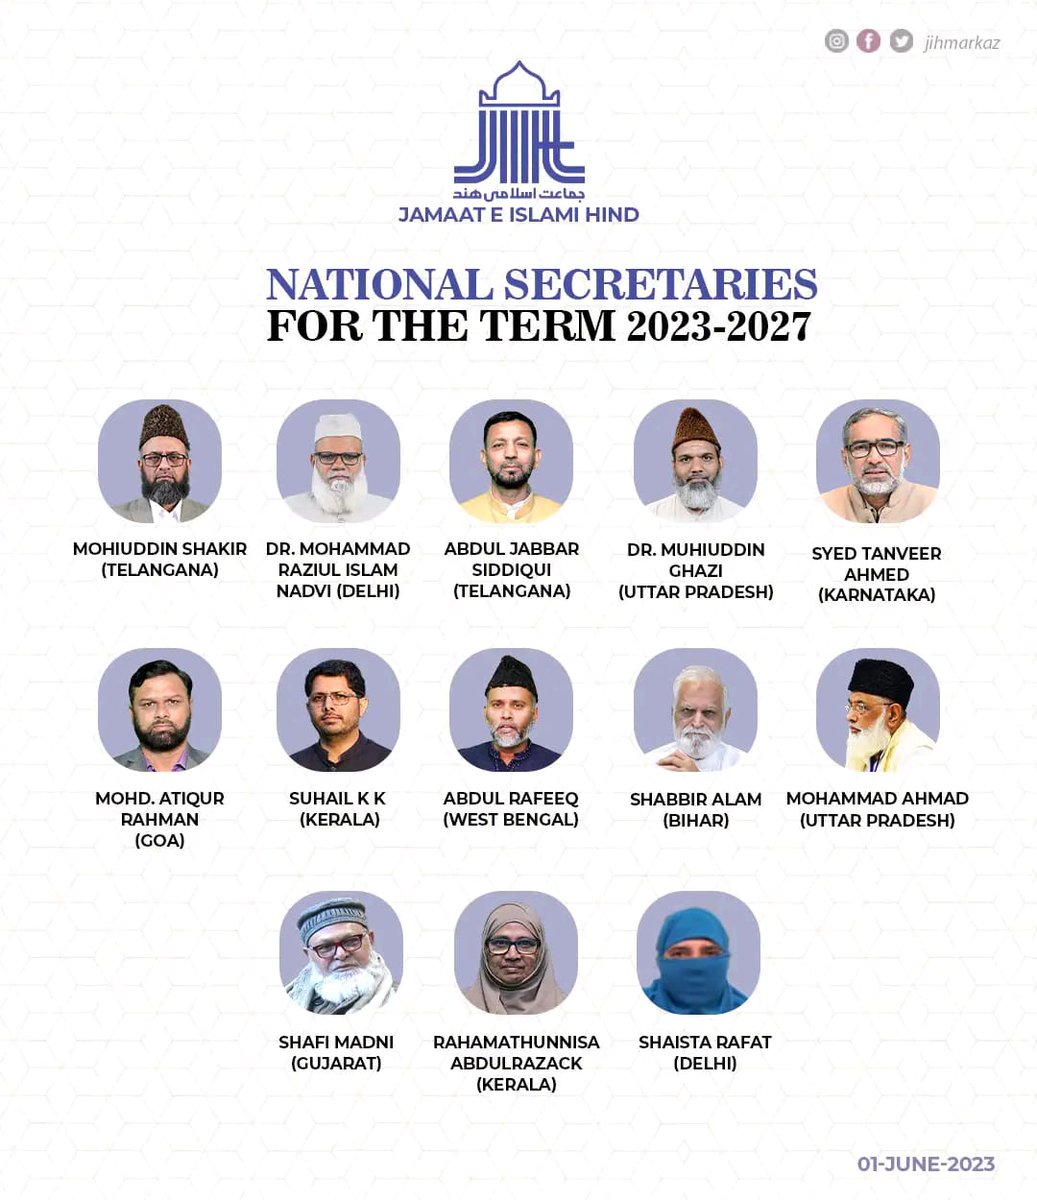 National Secretaries of Jamaat-e-Islami Hind for the Term 2023-2027
#JIHMarkaz #JamaateIslamiHind